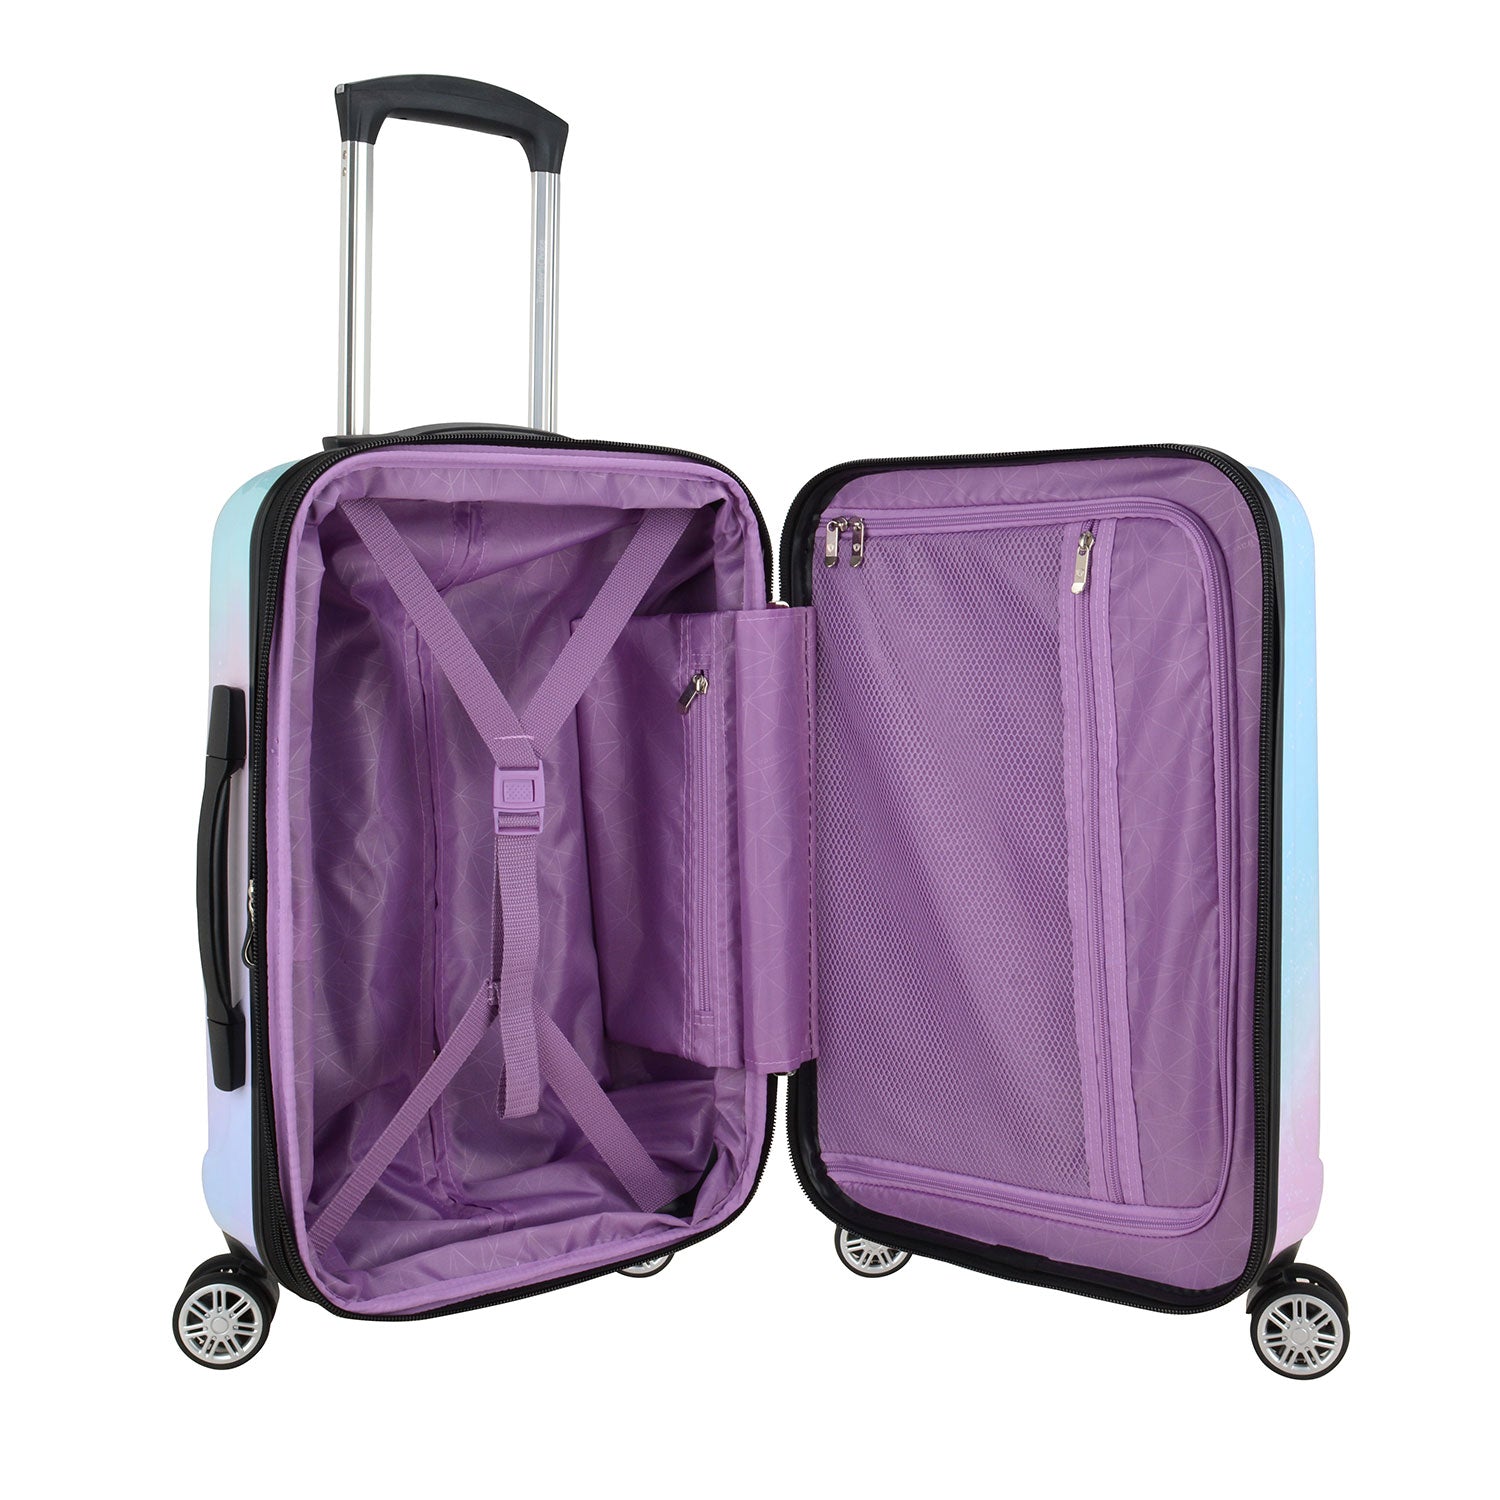 Ruma II Carry-On Luggage Spinner